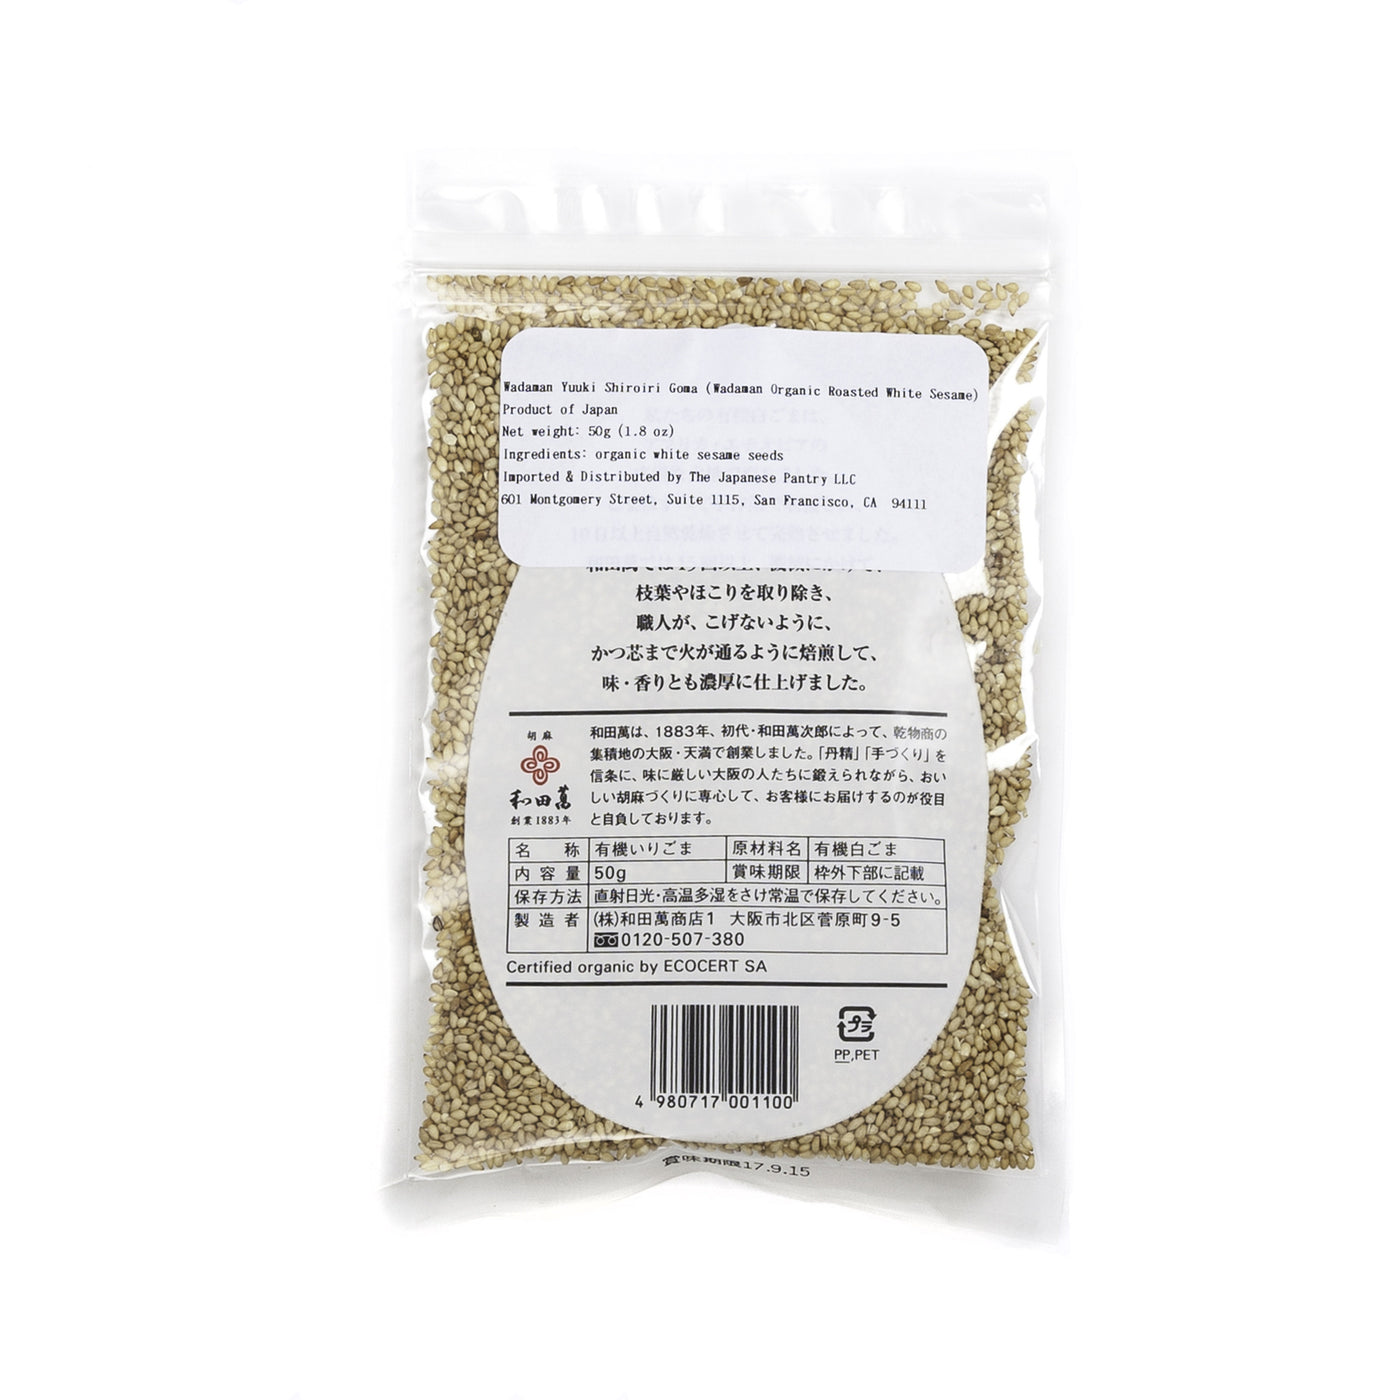 Roasted White Sesame Seeds, Organic - 50g